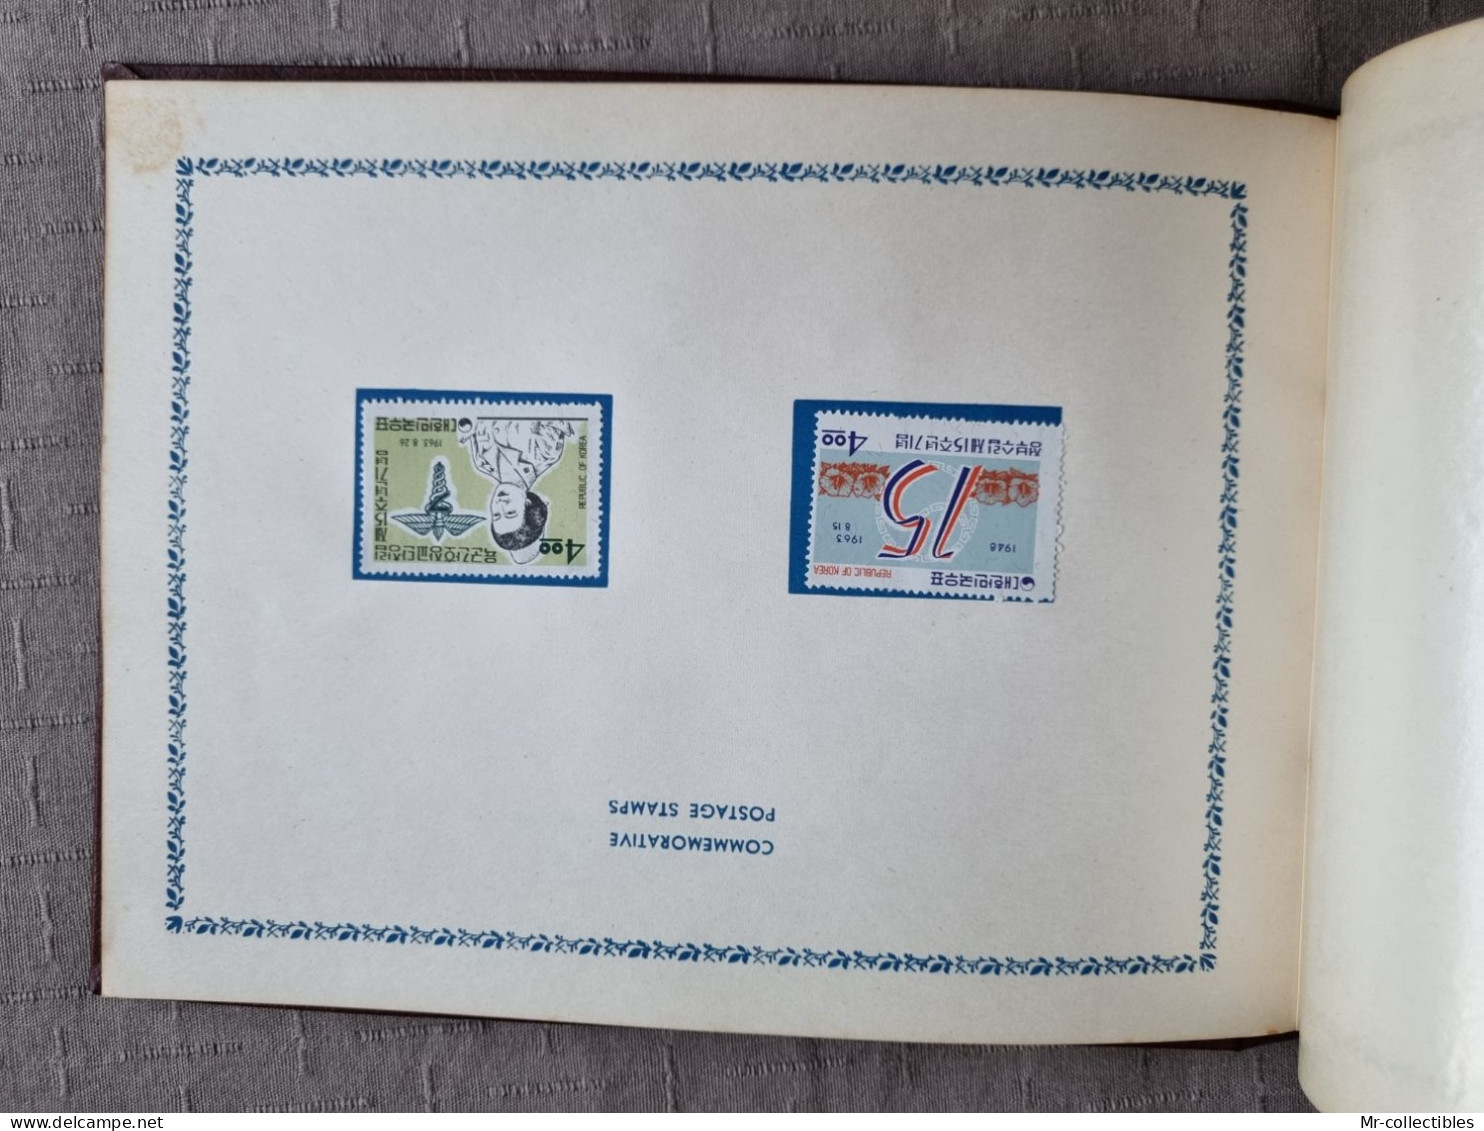 Korea 49 stamps. Booklet 1964 XV Universal Postal Congress Vienna